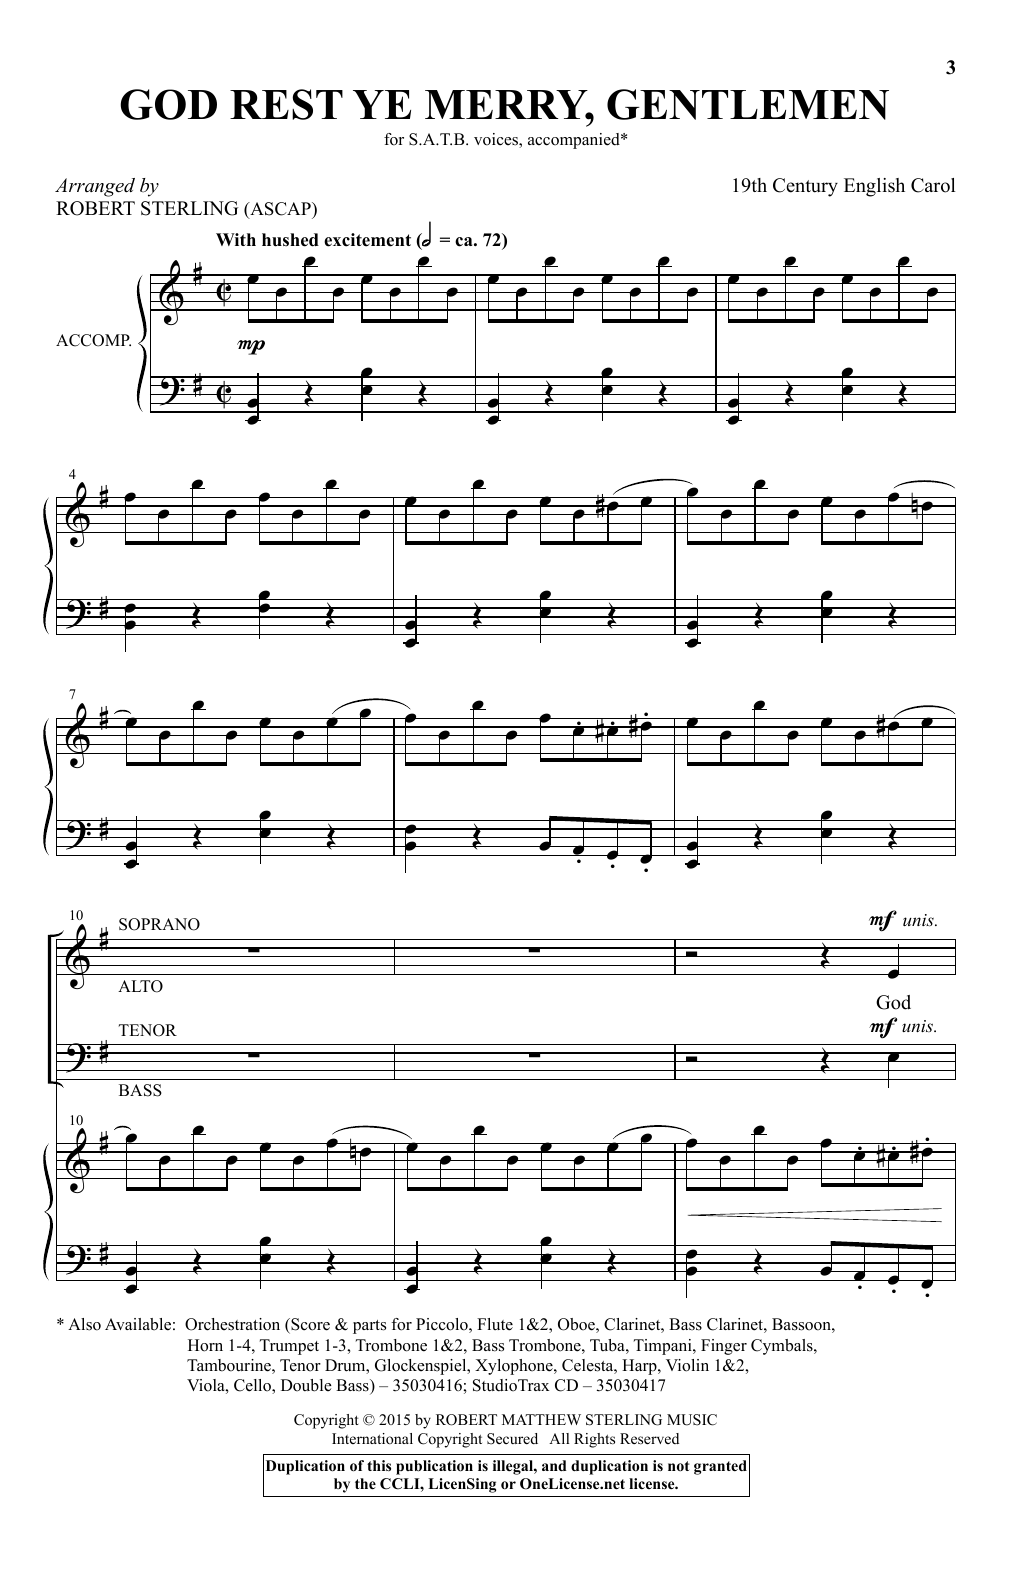 Robert Sterling God Rest Ye Merry, Gentlemen Sheet Music Notes & Chords for SATB - Download or Print PDF